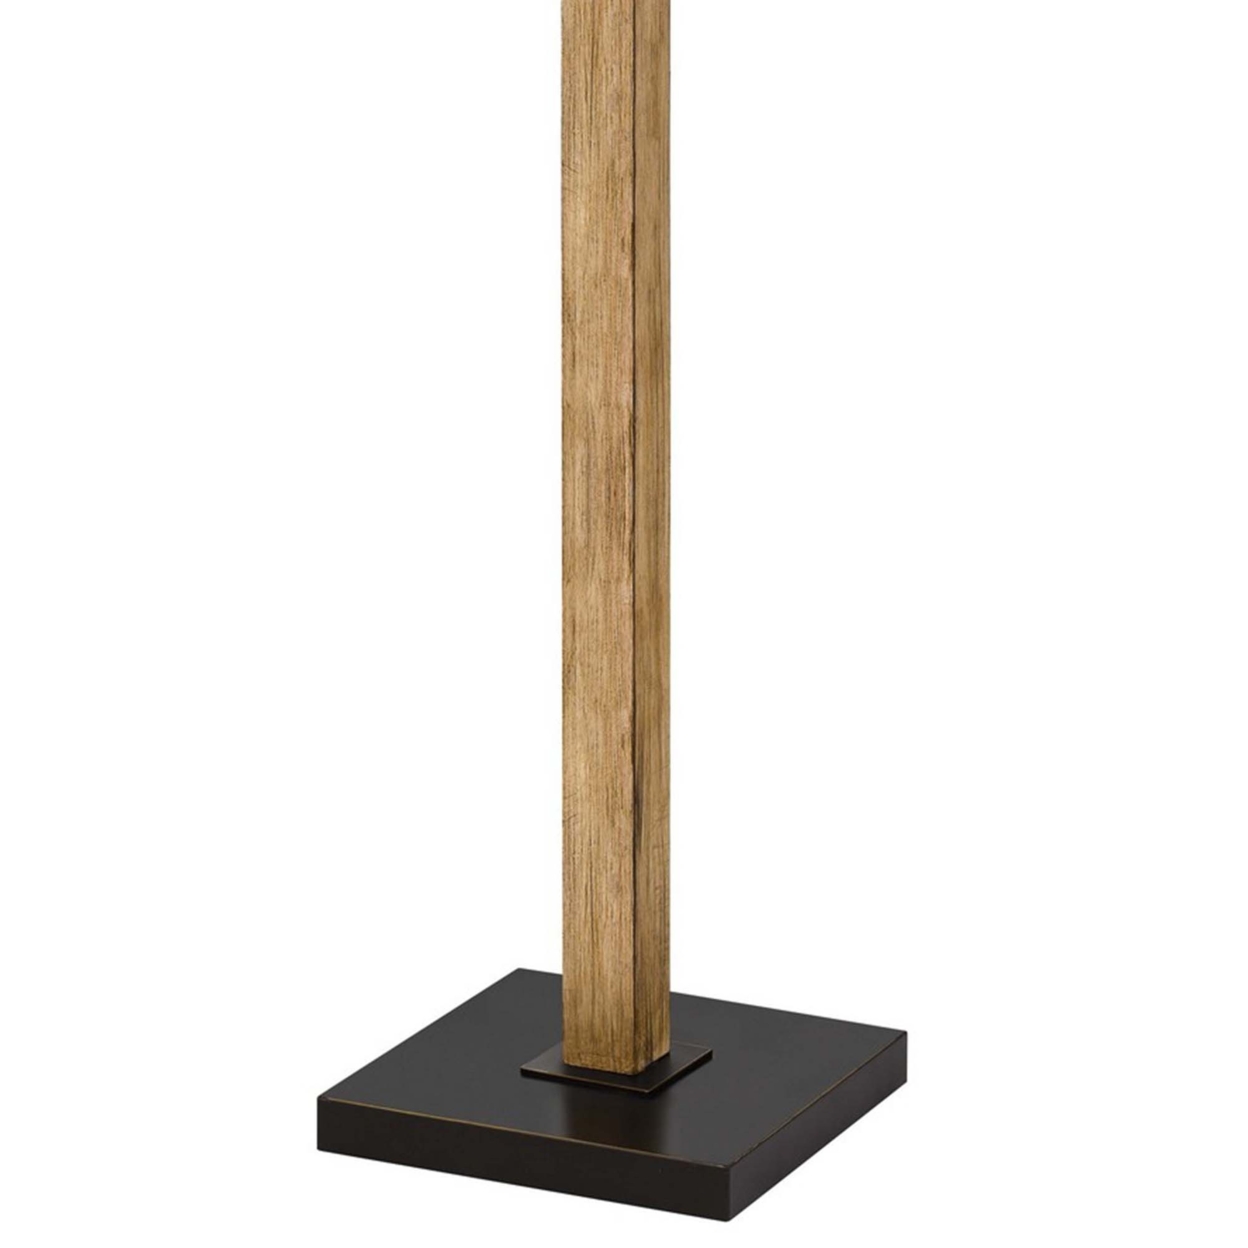 Wooden Floor Lamp With 3 Metal Mesh Shades, Brown And Black- Saltoro Sherpi